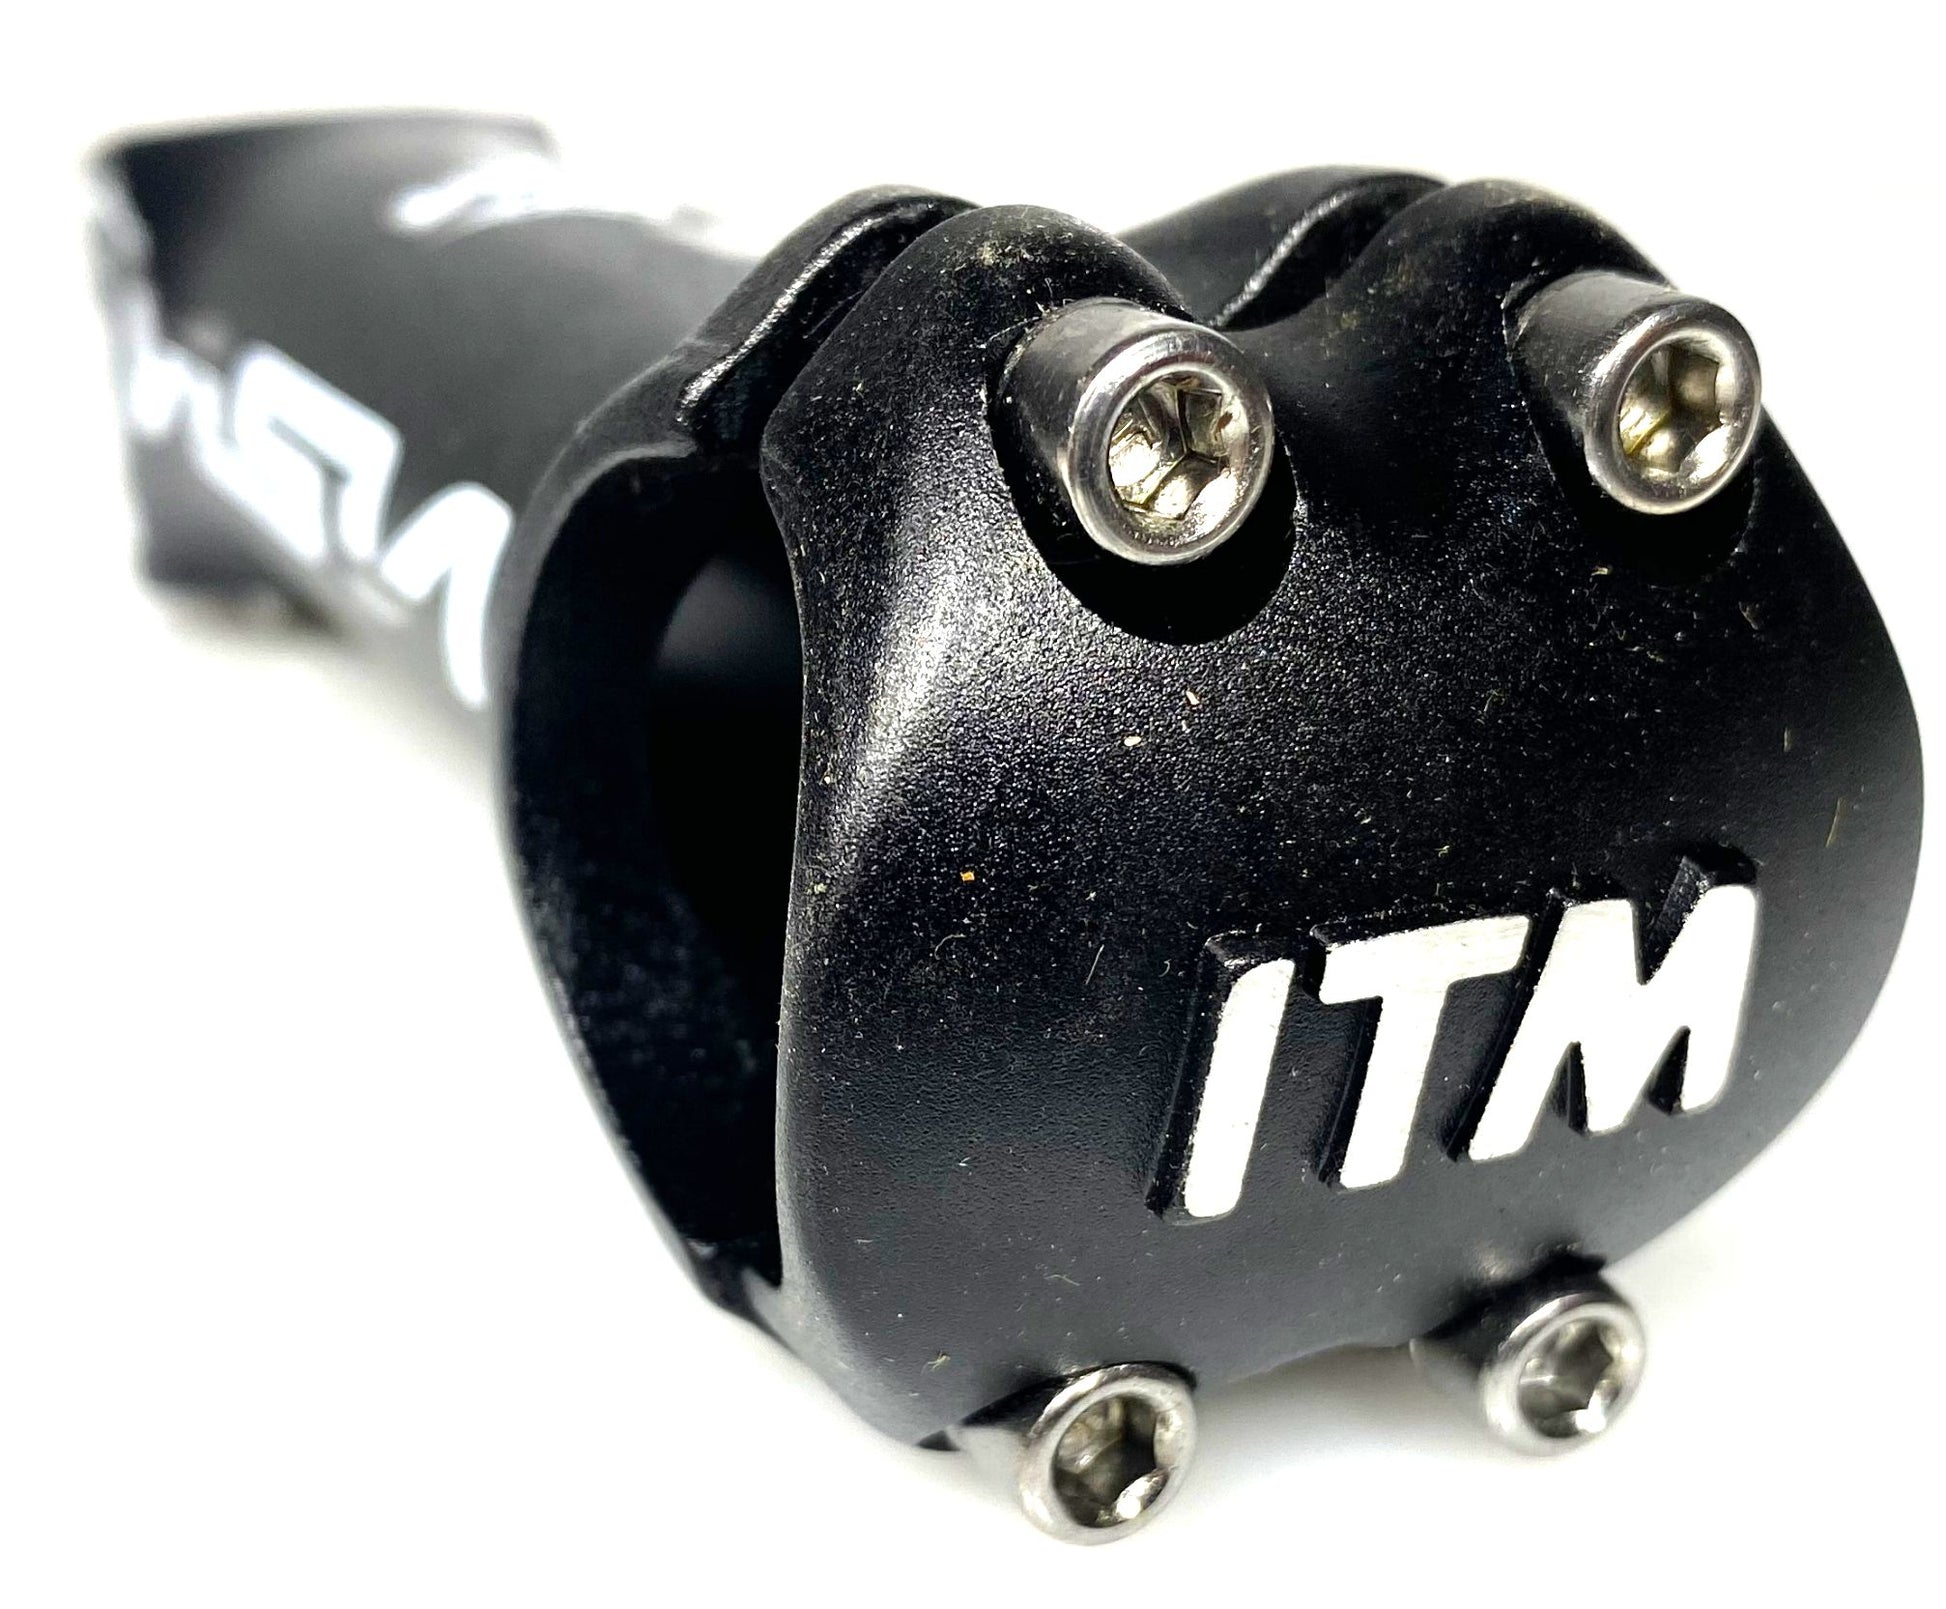 ITM C-Work Bike Stem 31.8 mm x 130mm x 1-1/8" Threadless Black NEW - Random Bike Parts